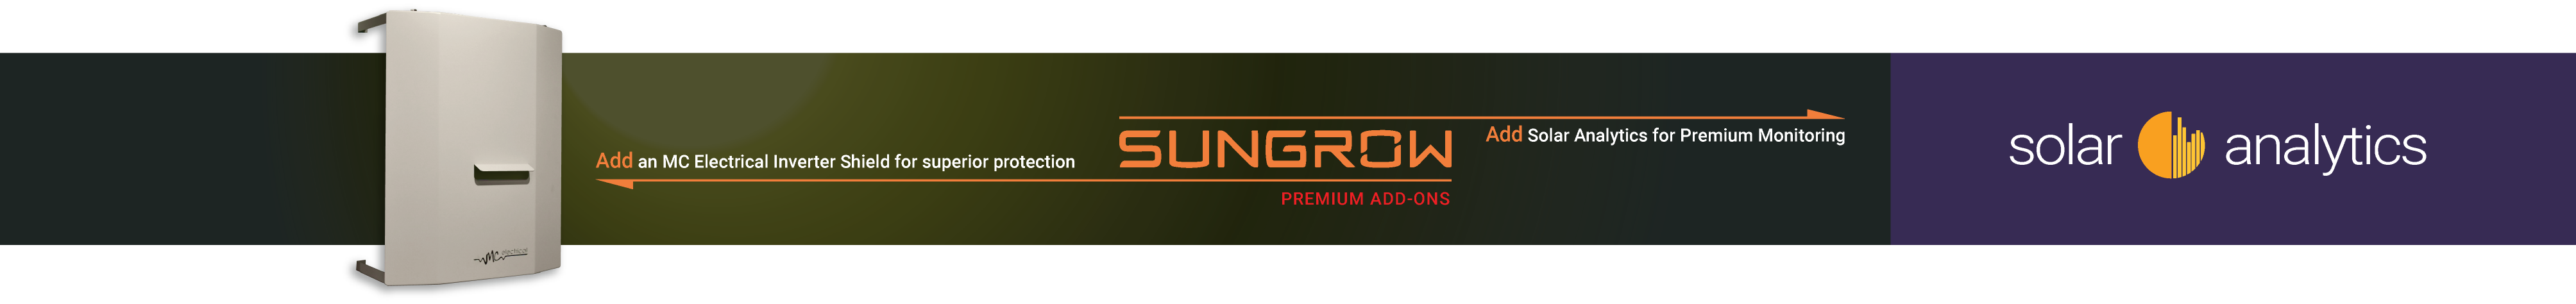 sungrow-inverter-shield-solar-analytics